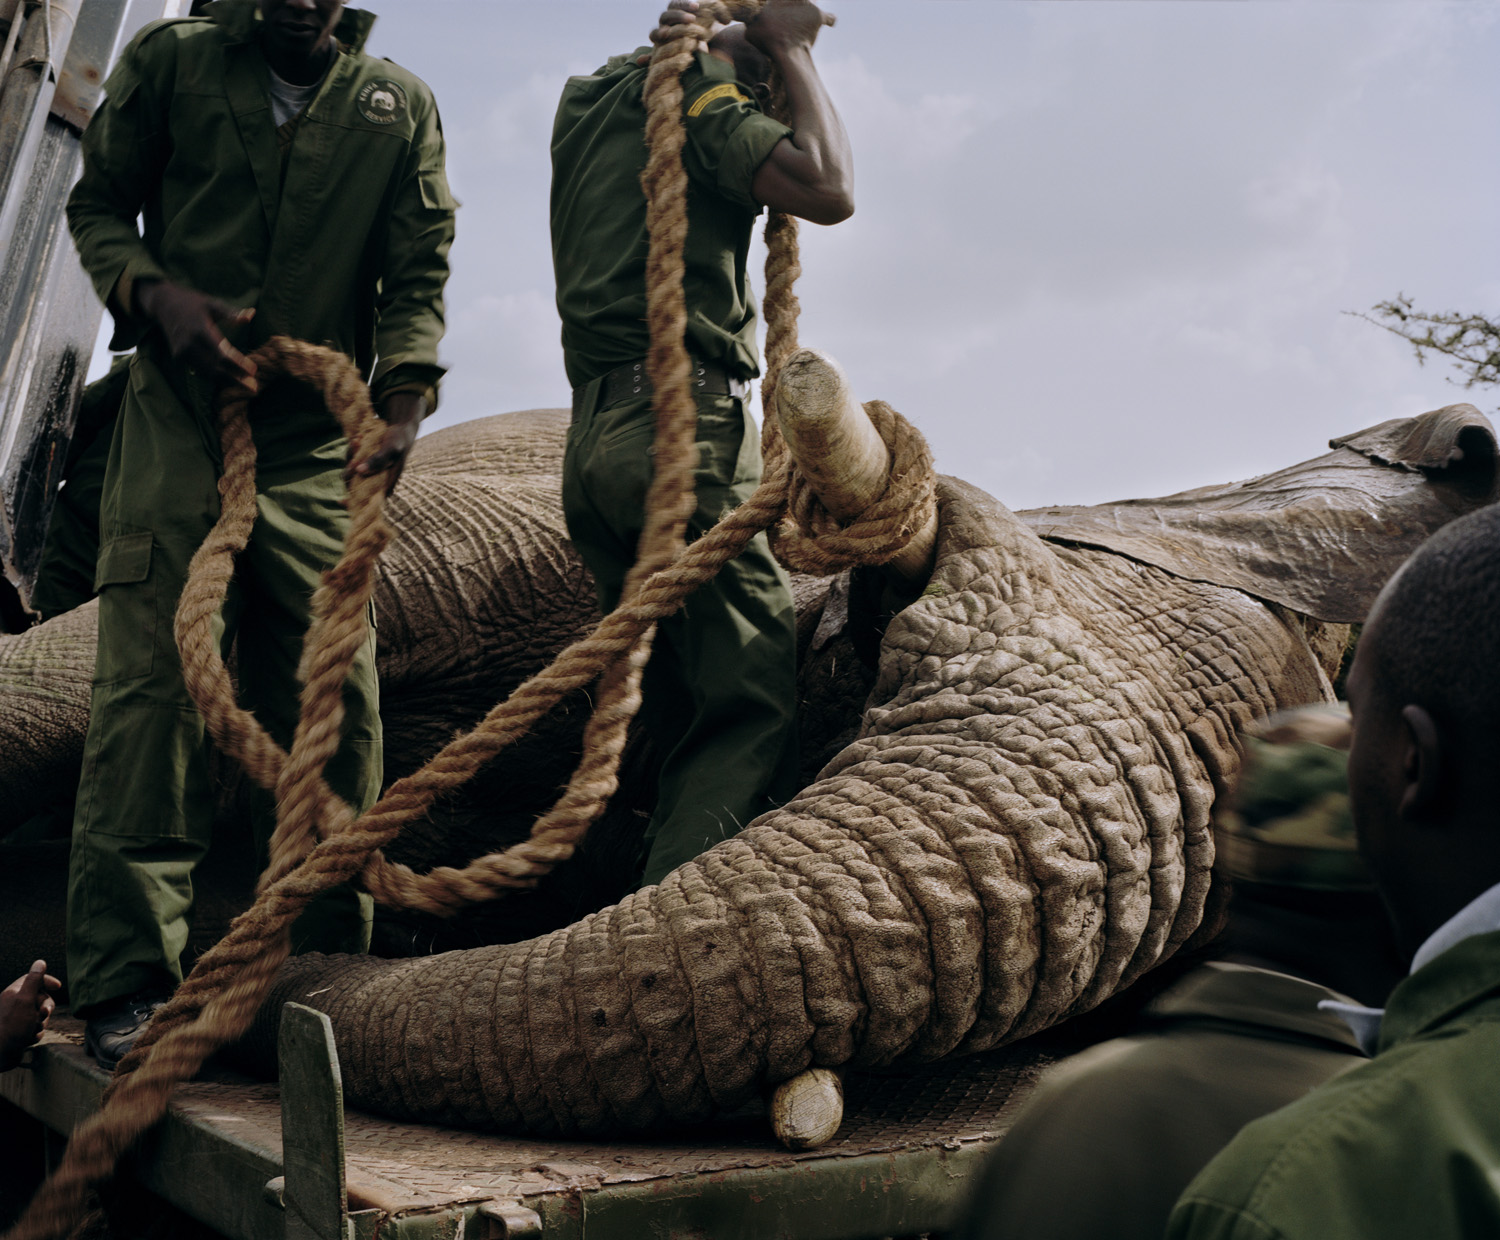 DC 263.41 001 elephant relocation # VI, ol pejeta conservancy, n